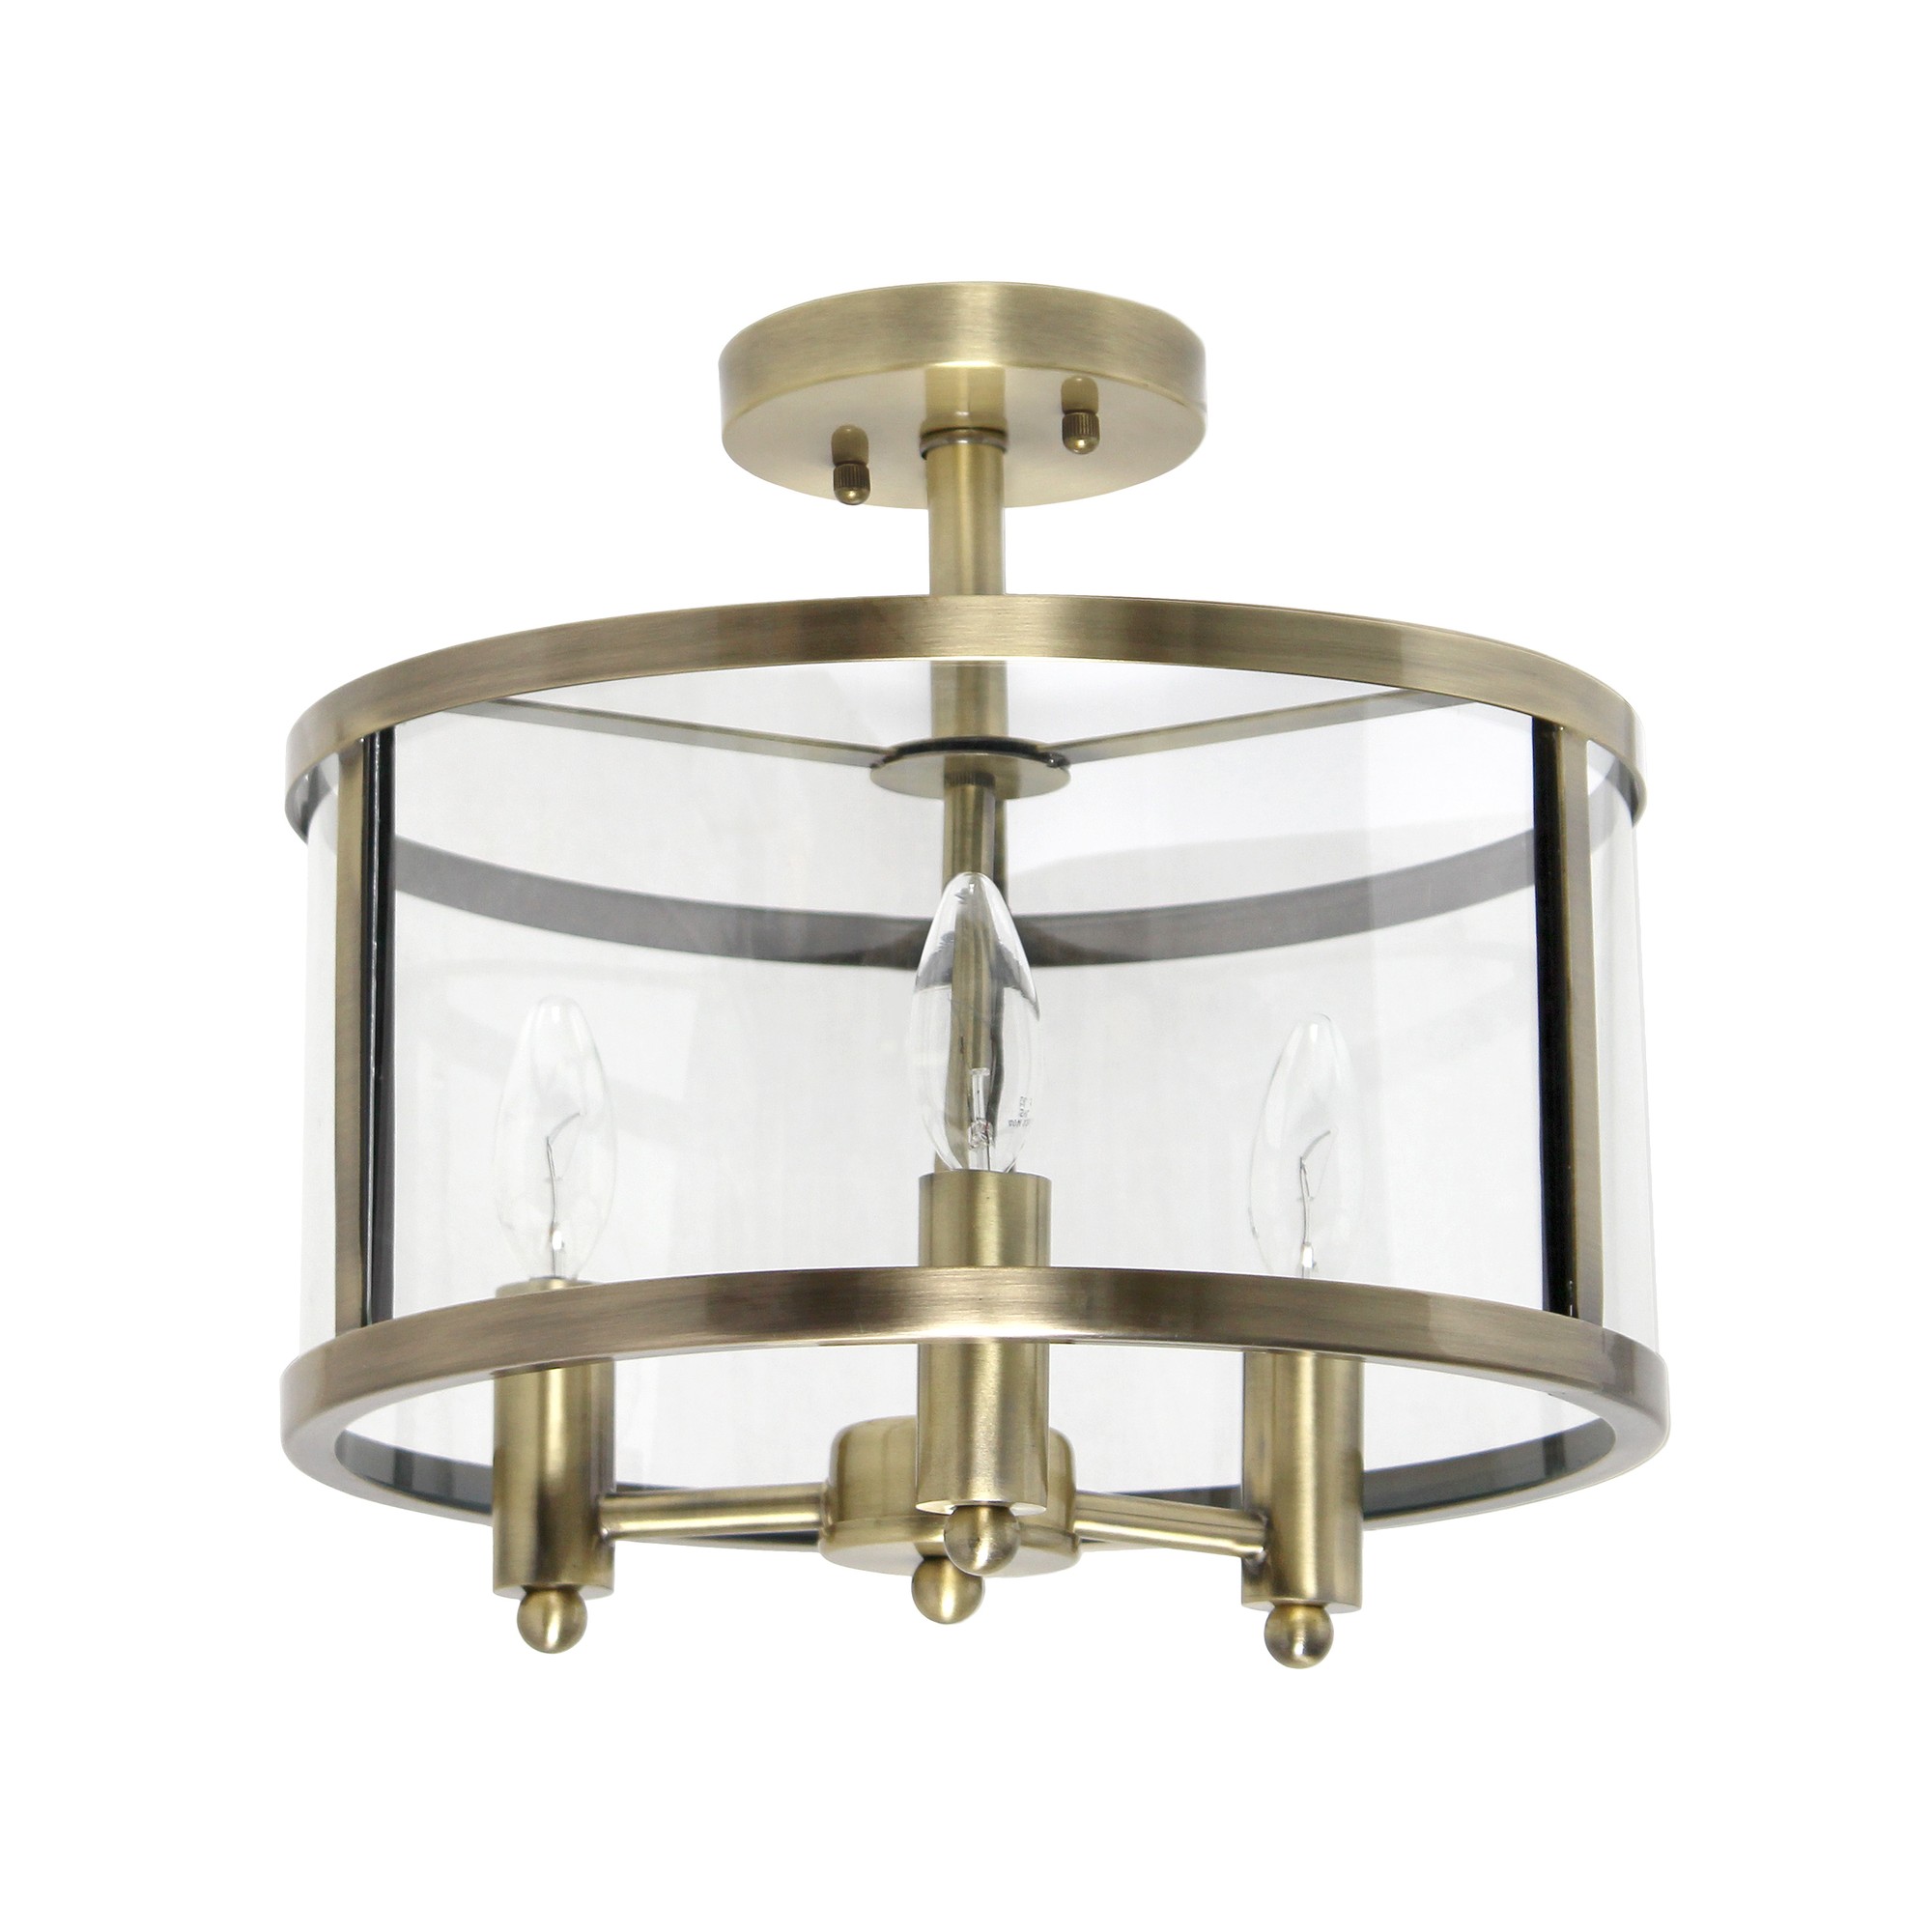 Lalia Home 3-Light 13" Industrial Farmhouse Glass and Metallic Accented Semi-flushmount, Antique Brass